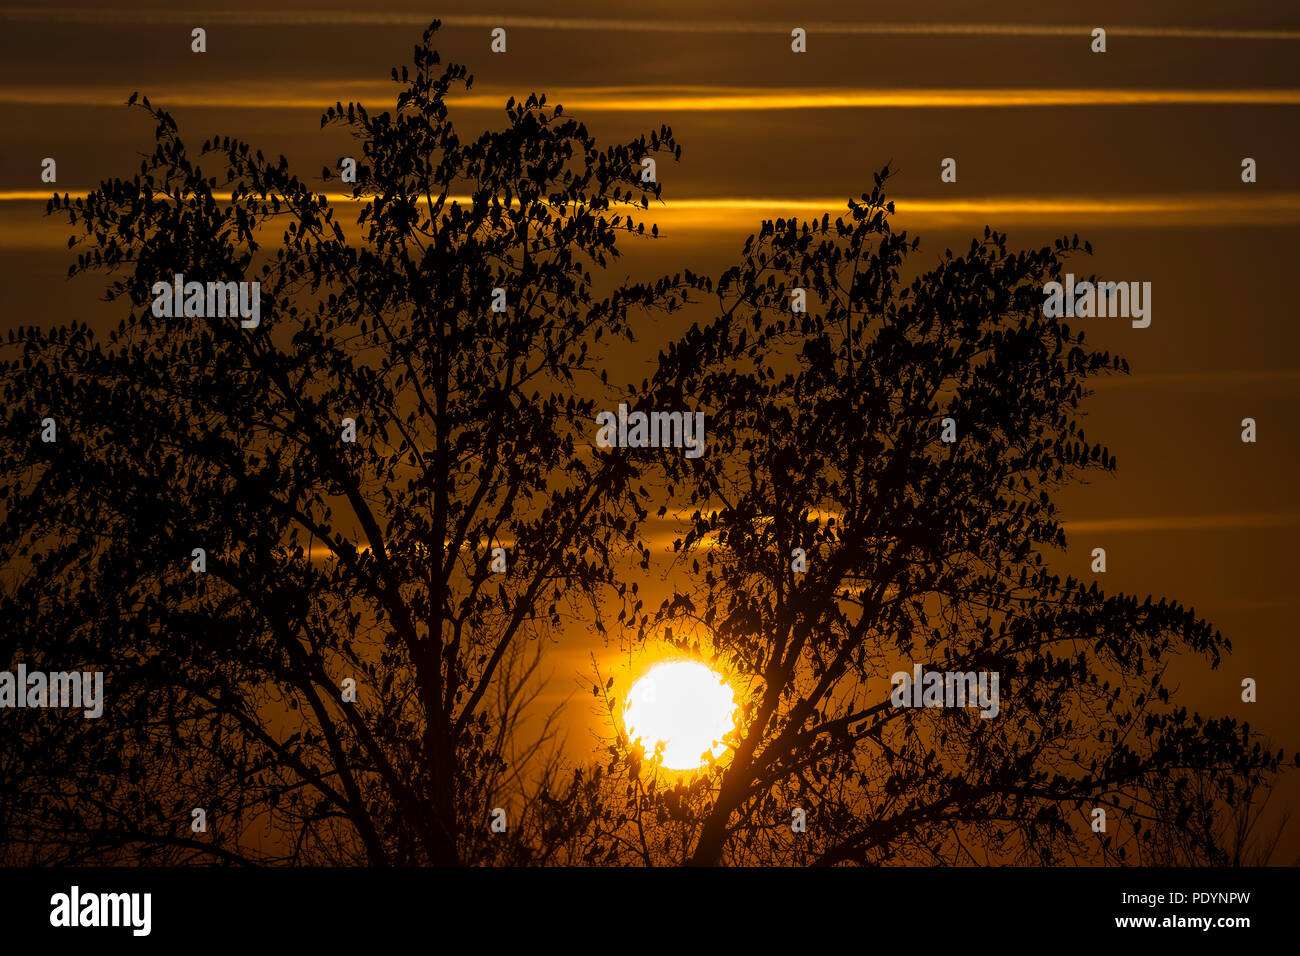 Gemeinsame Stare Rastplätze in Bäume bei Sonnenuntergang Stockfoto